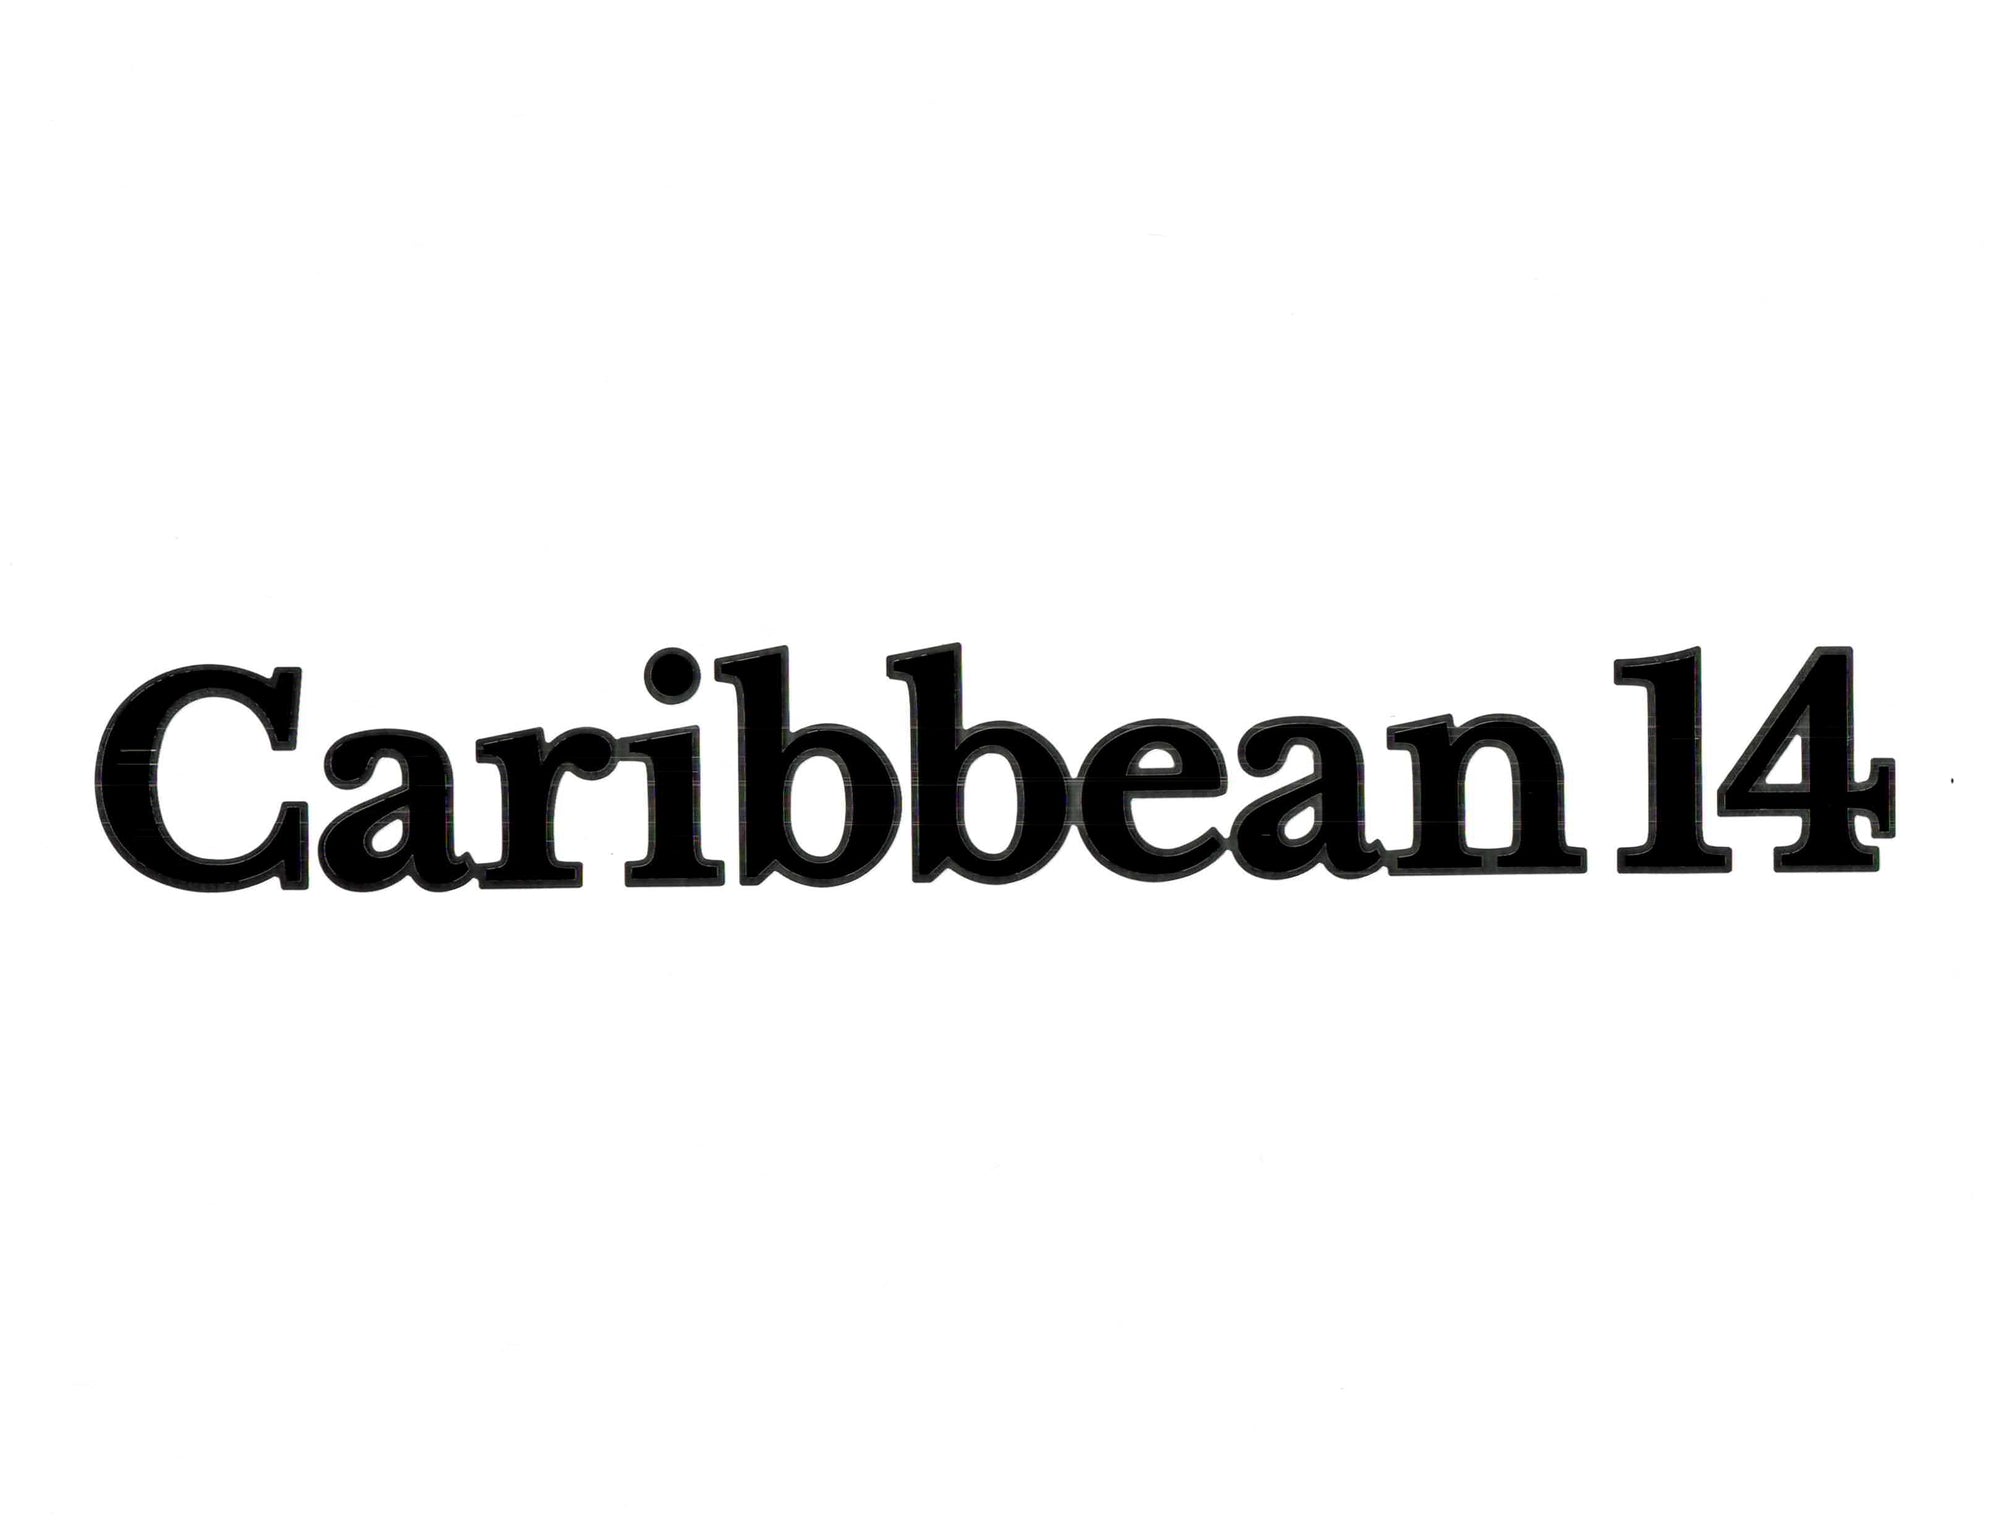 New Caribbean 14 Decal